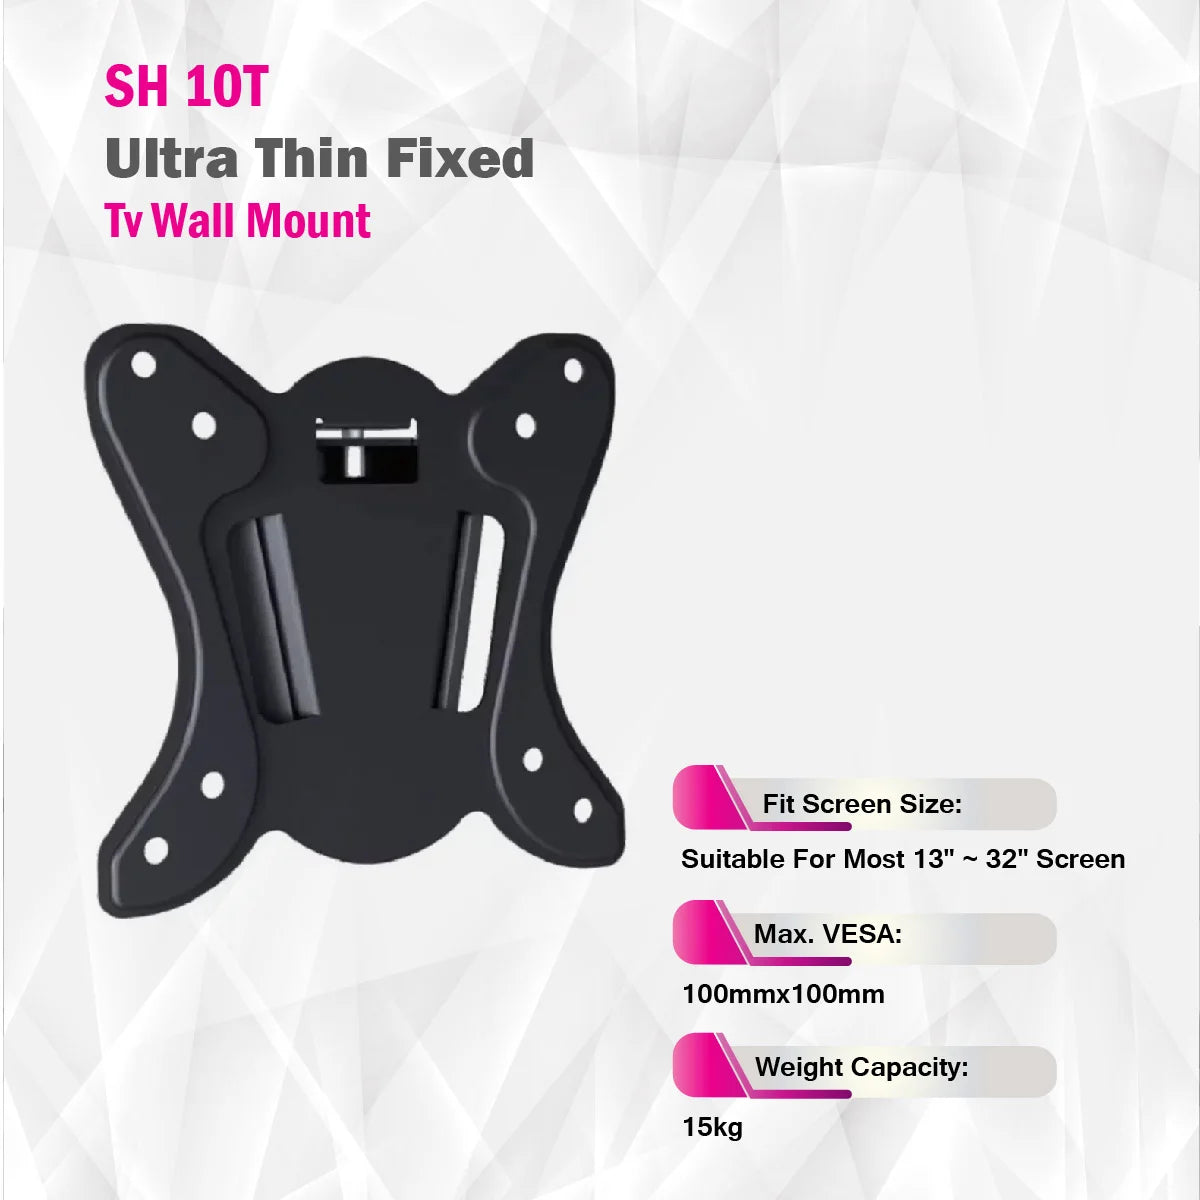 SkillTech -SH 10T - Ultra Thin Fixed Tv Wall Mount